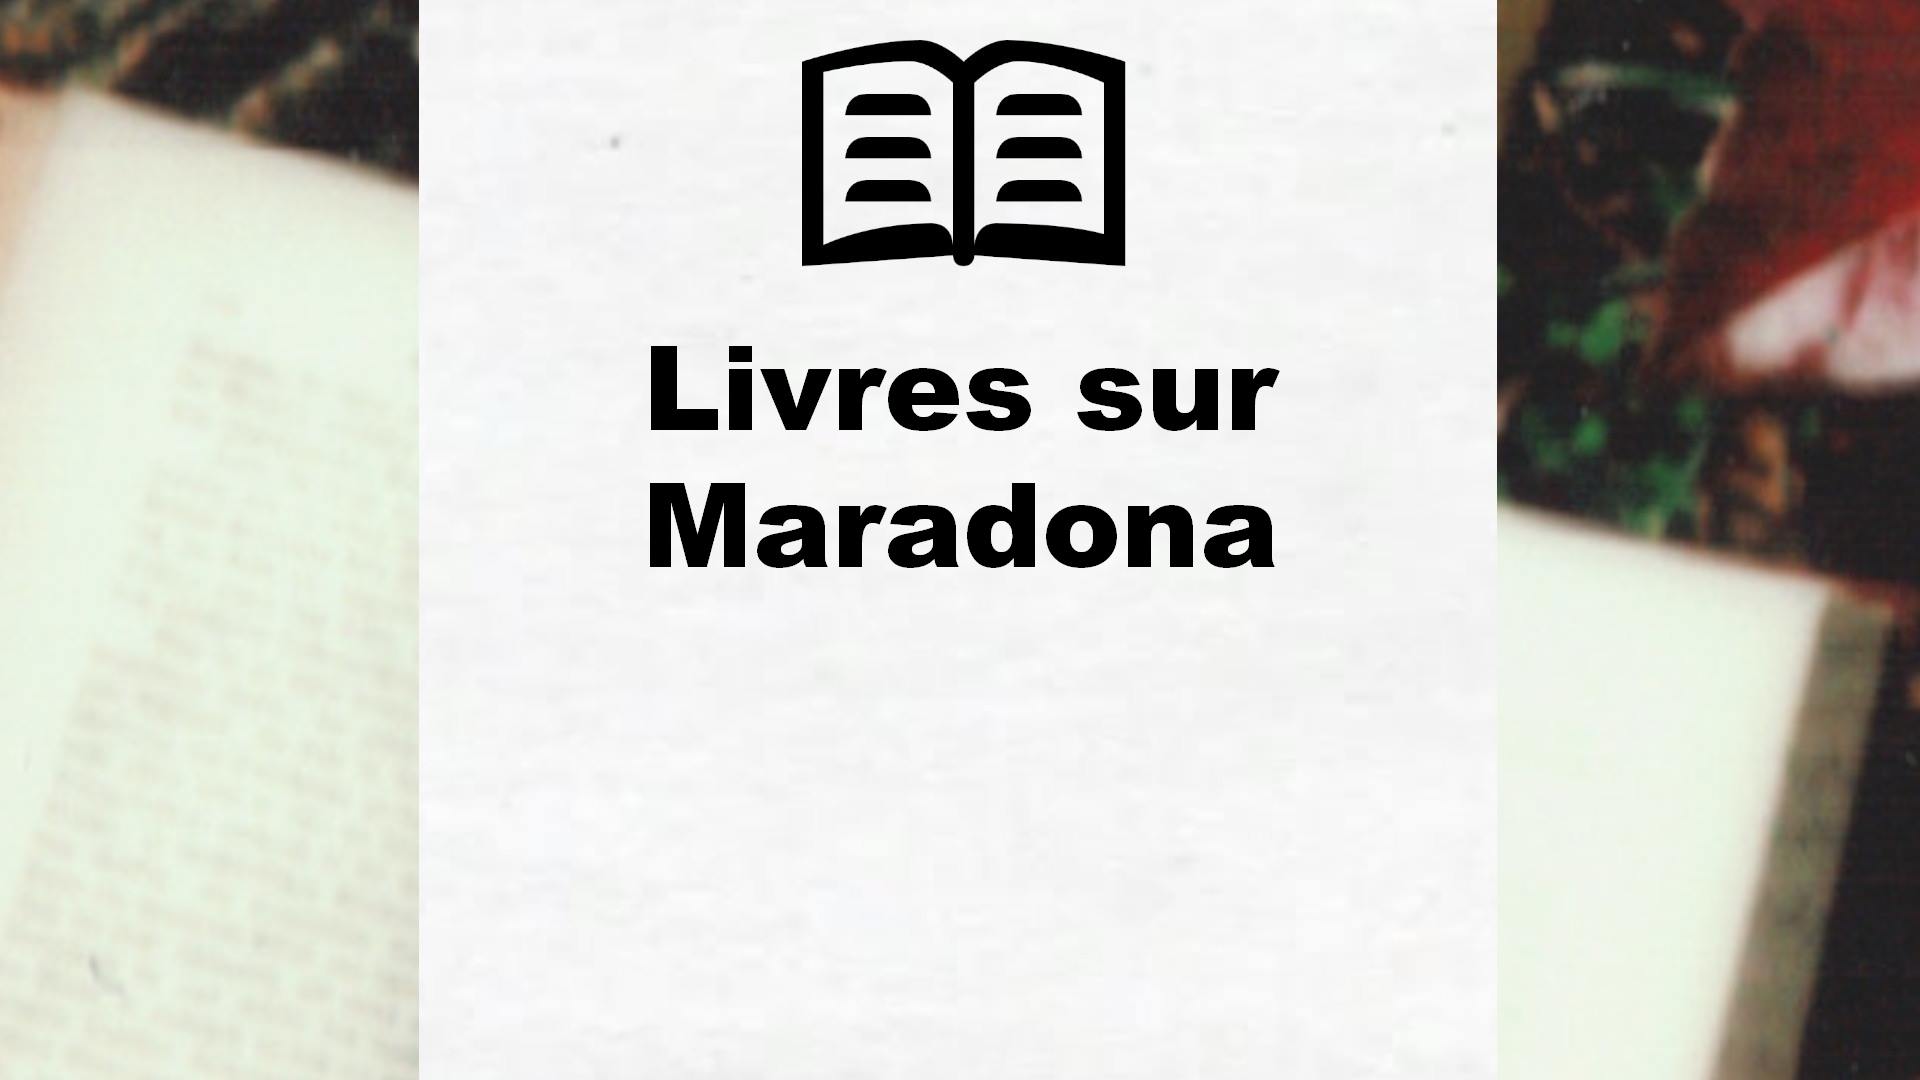 Livres sur Maradona